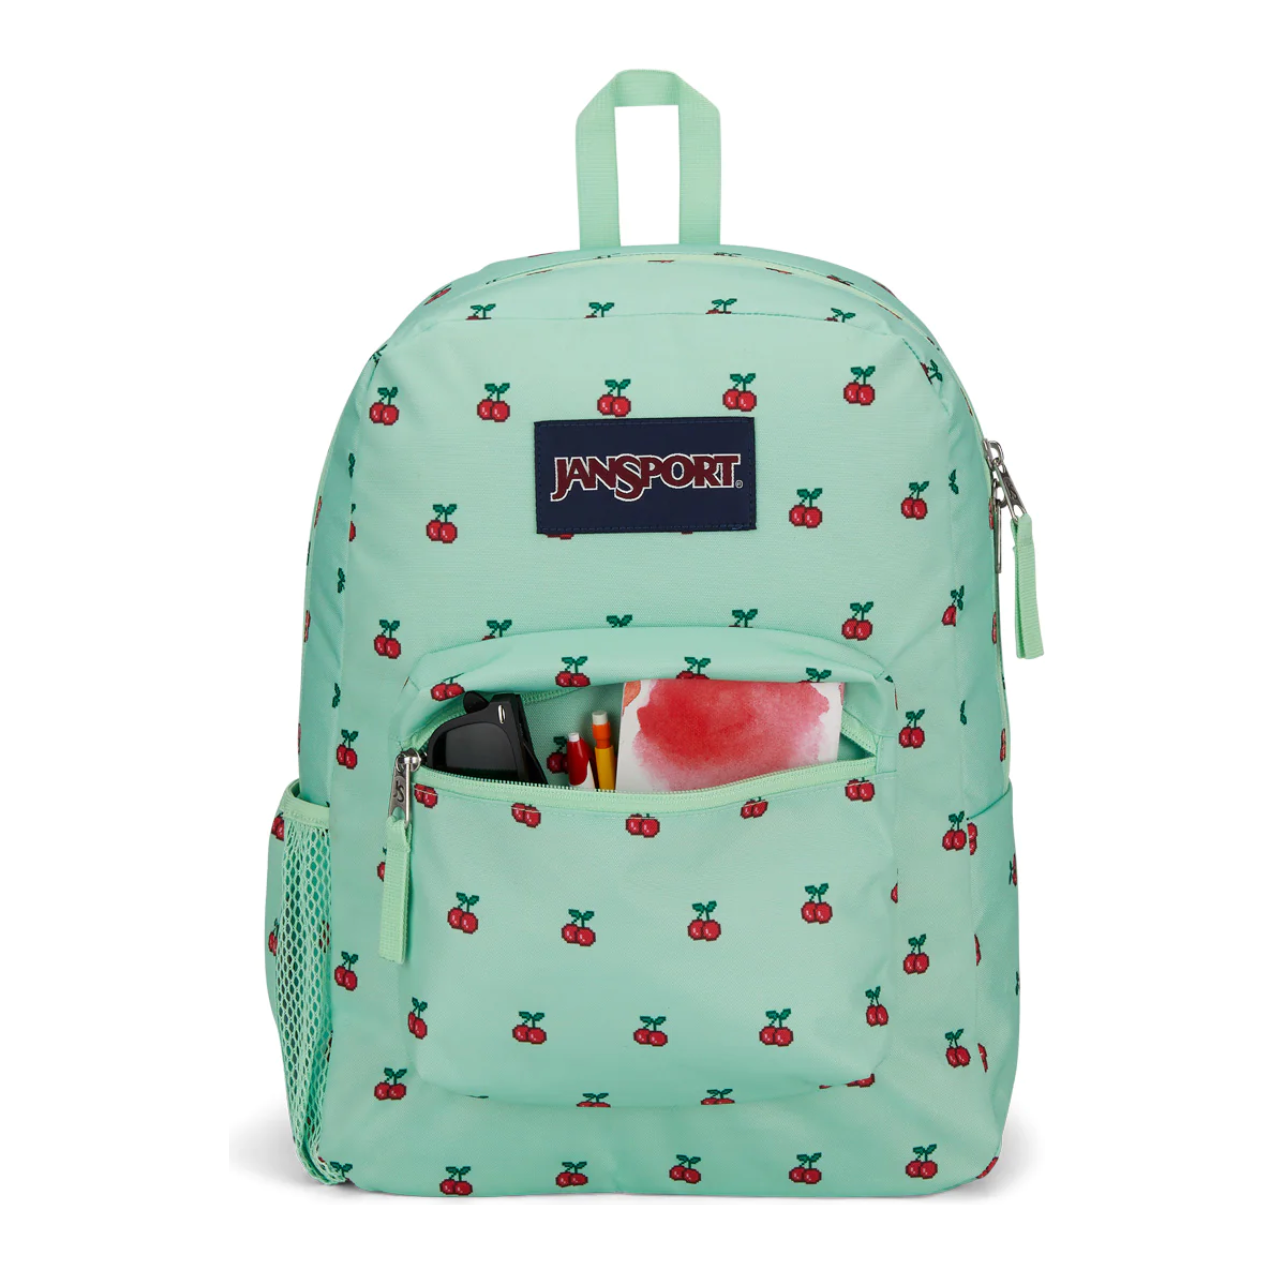 Jansport Cross Town Backpack - 8 Bit Cherries